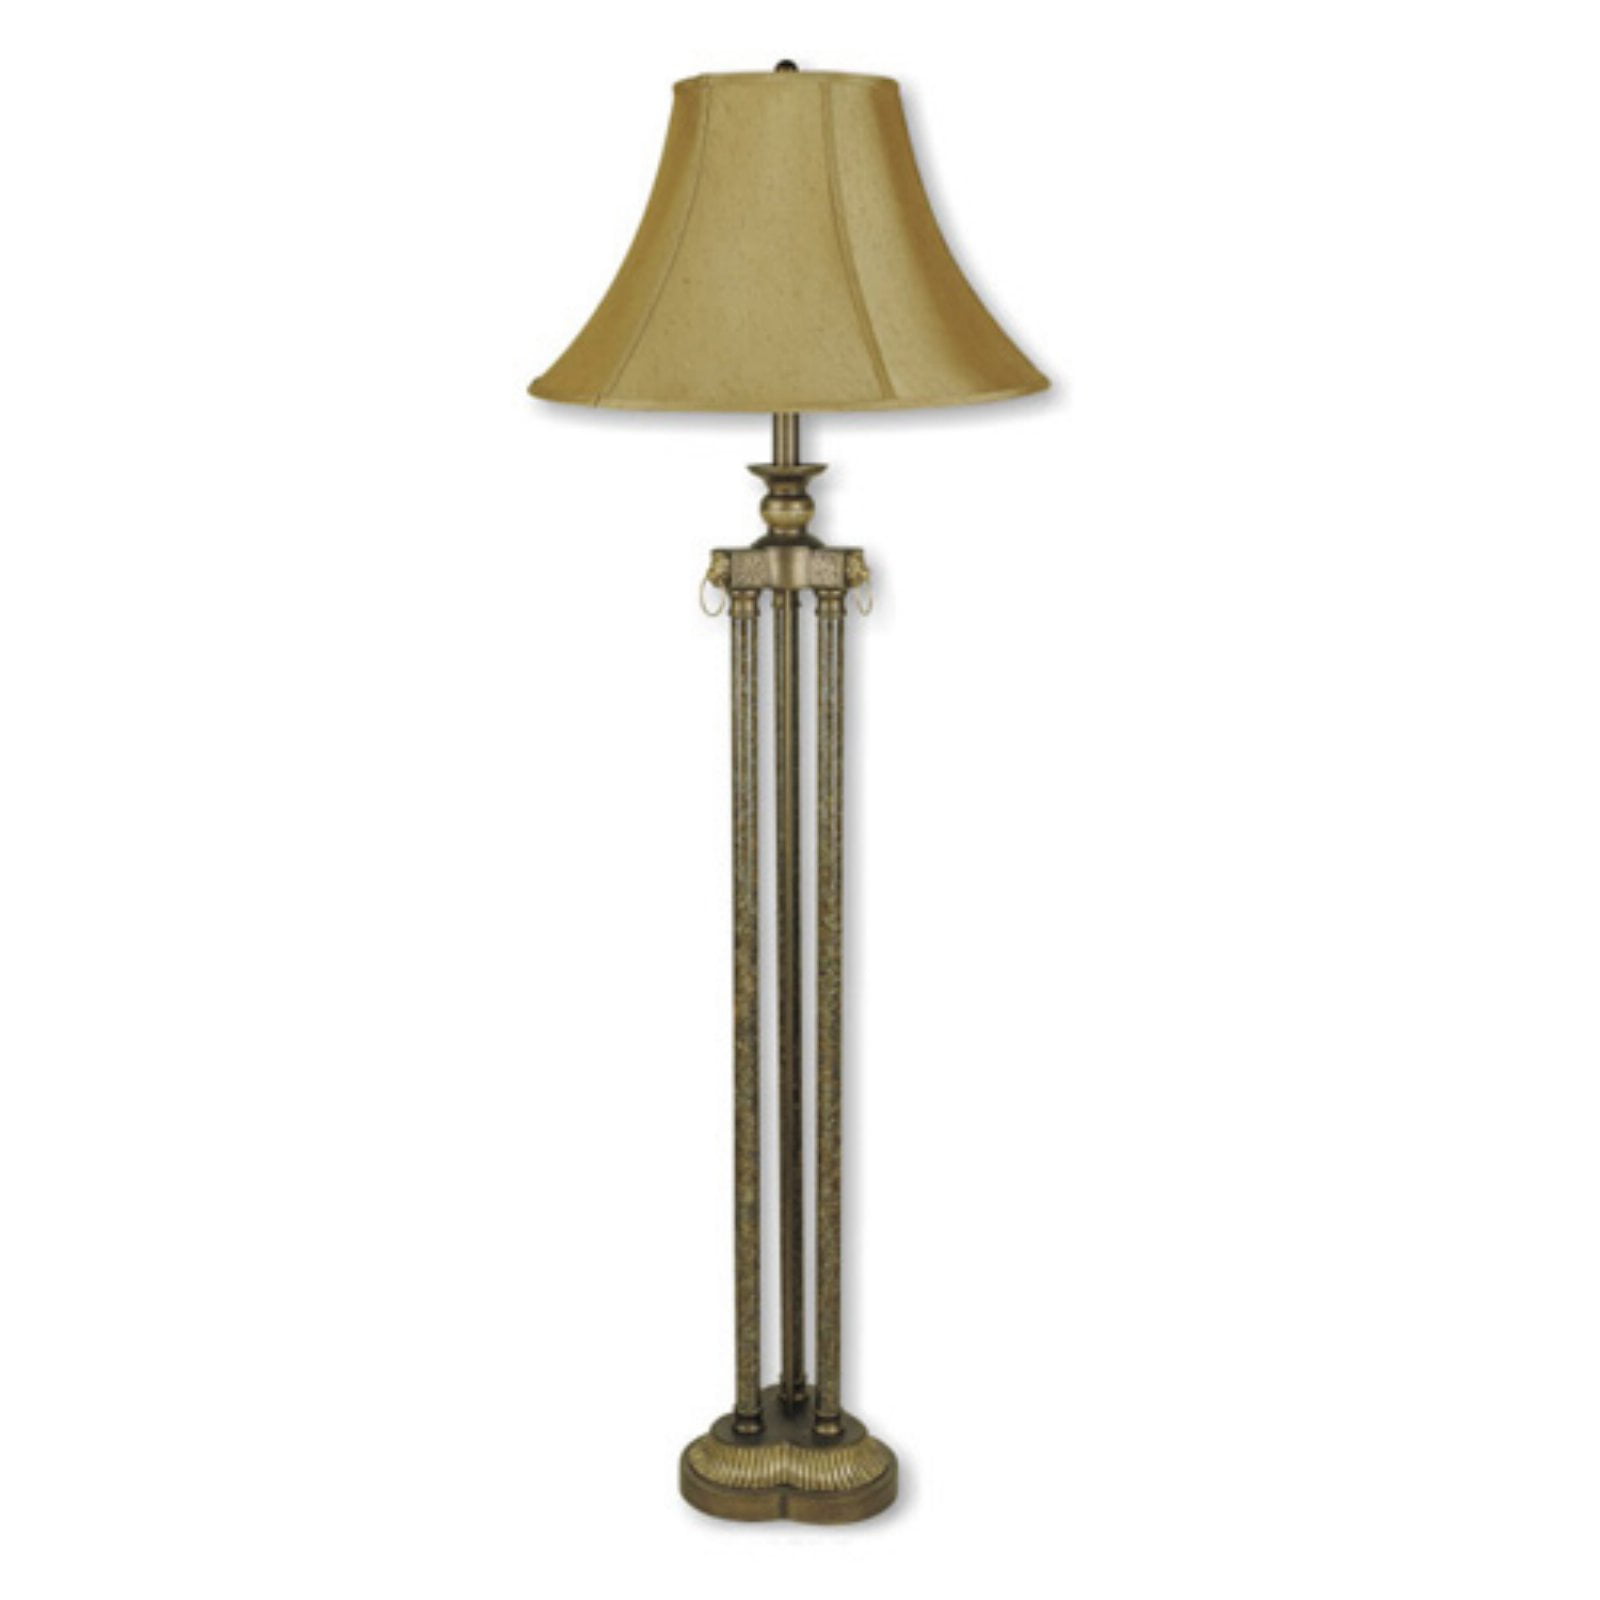 ORE International 3-Pillar Floor Lamp, Antique Gold - Walmart.com